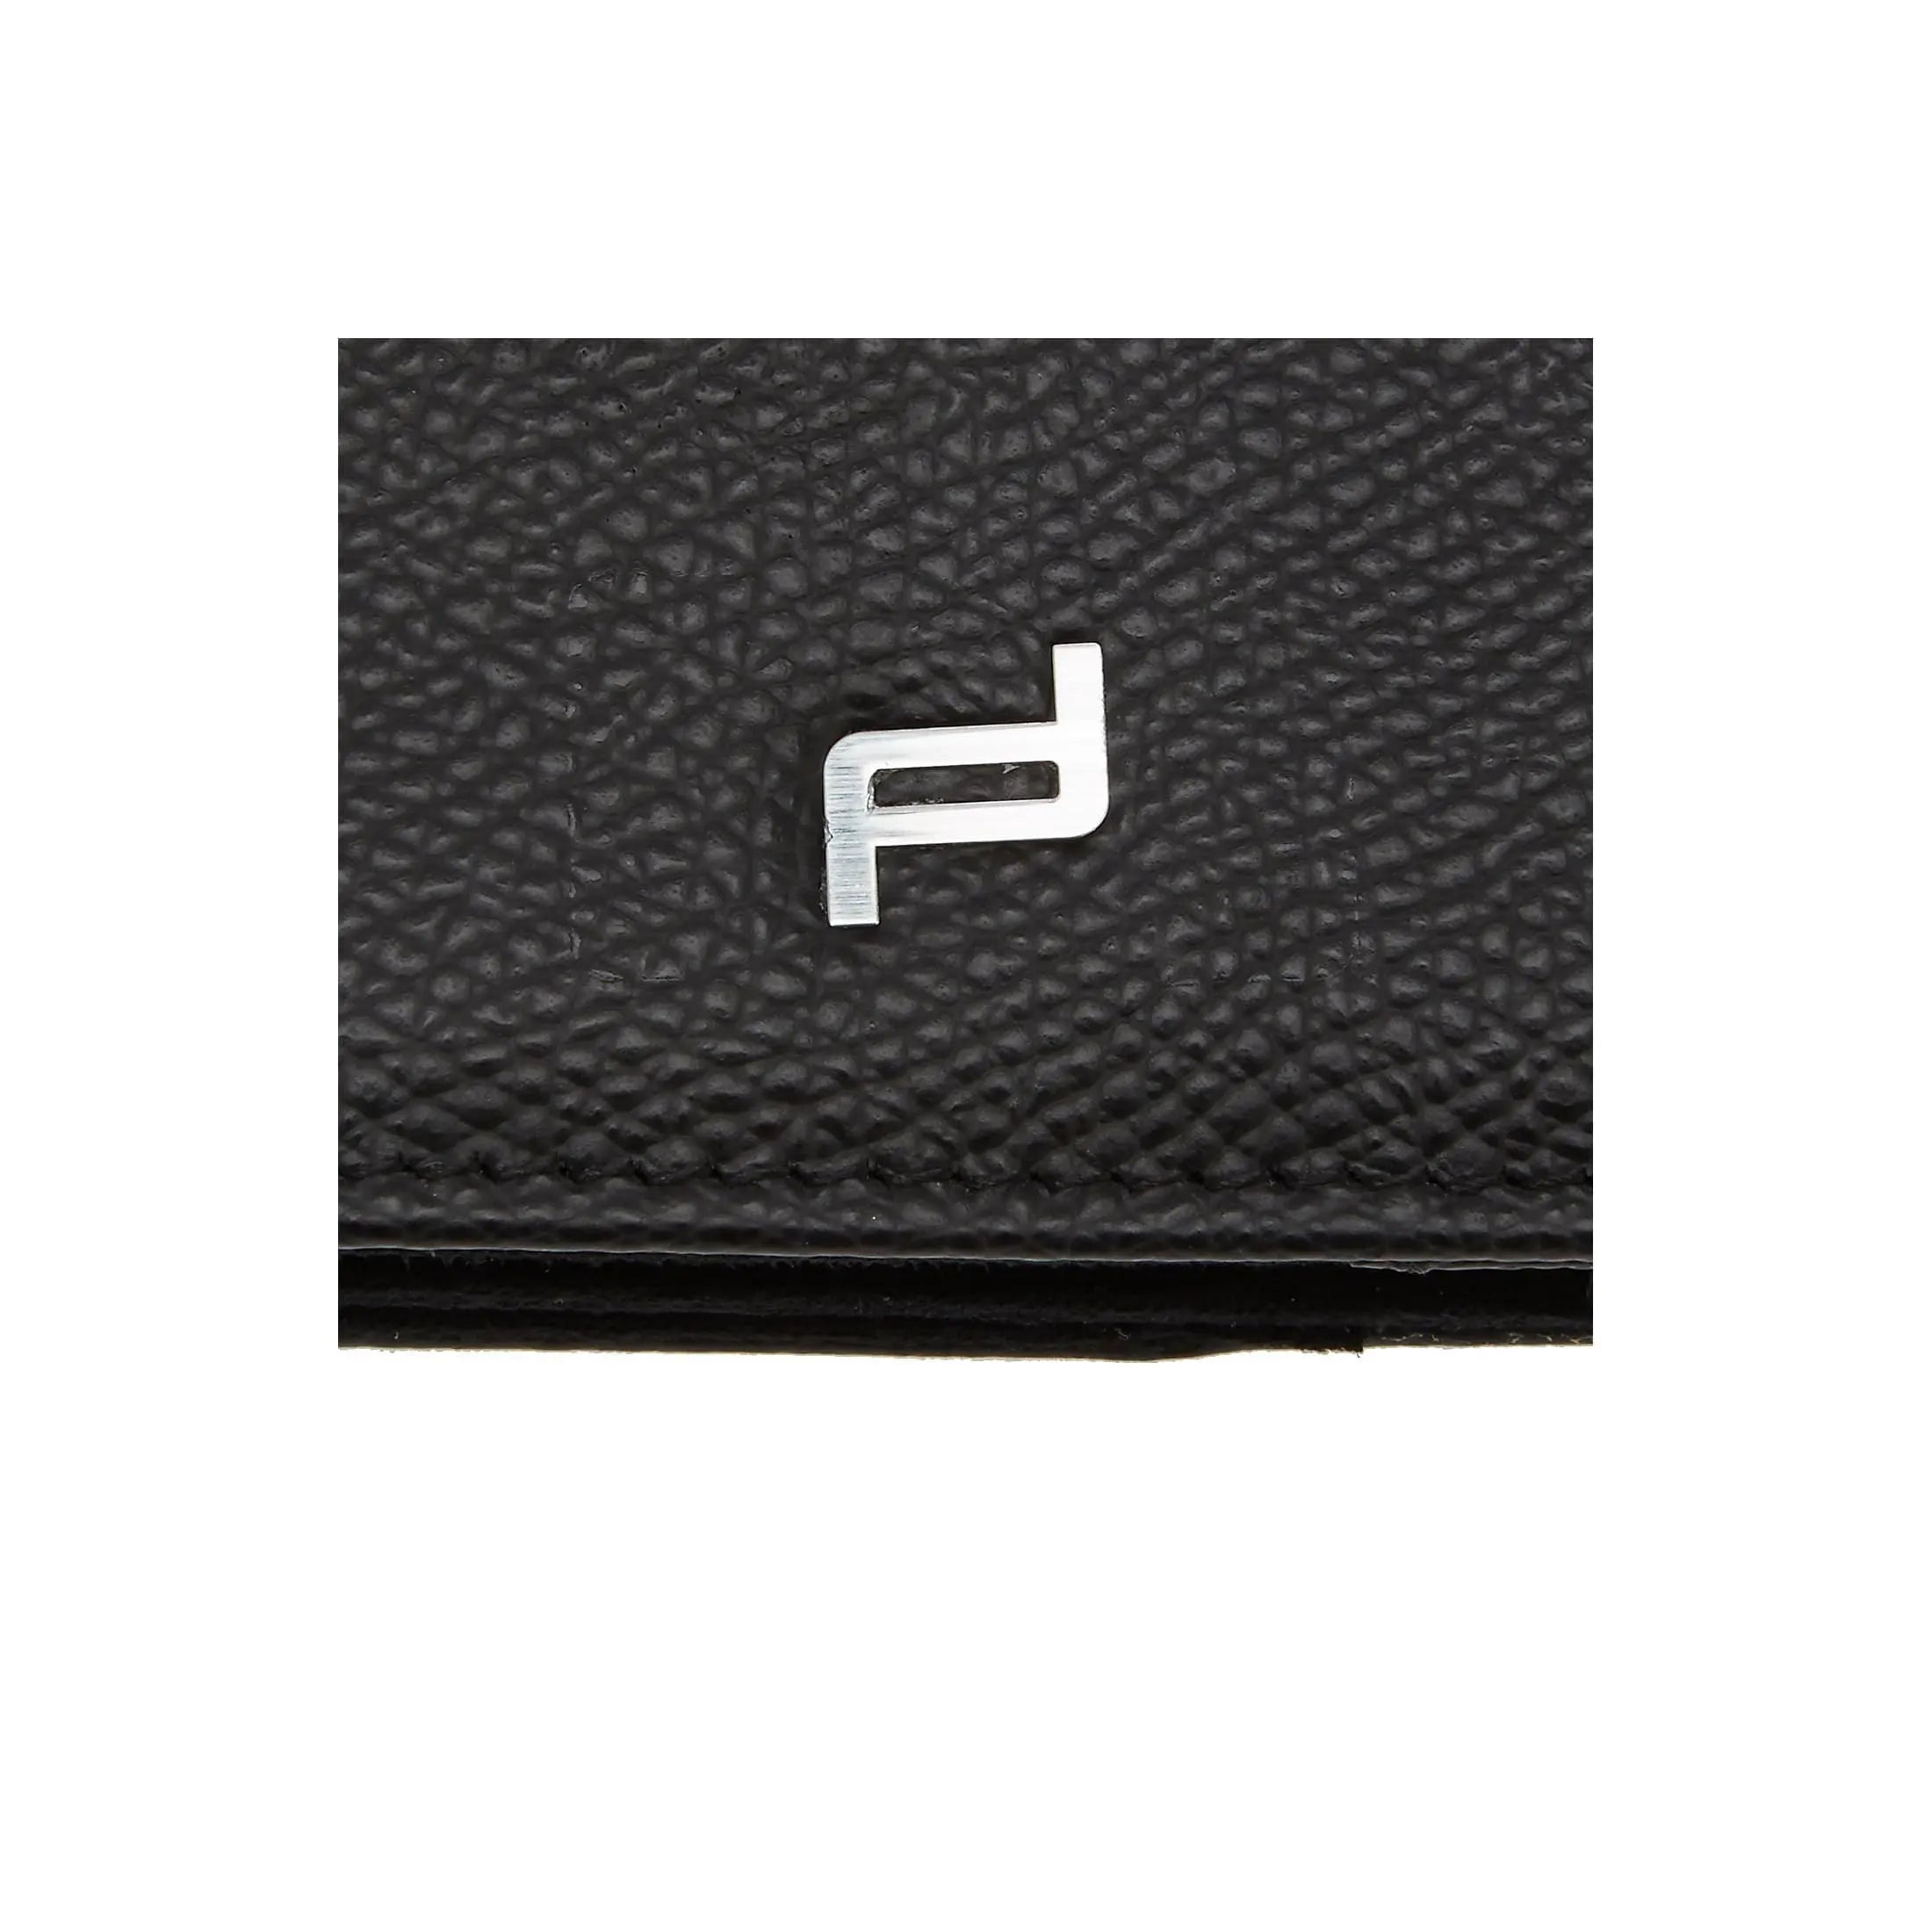 Coque Porsche Design French Classic 3.0 pour iPad Mini 2 Coque 1 20 cm - noire